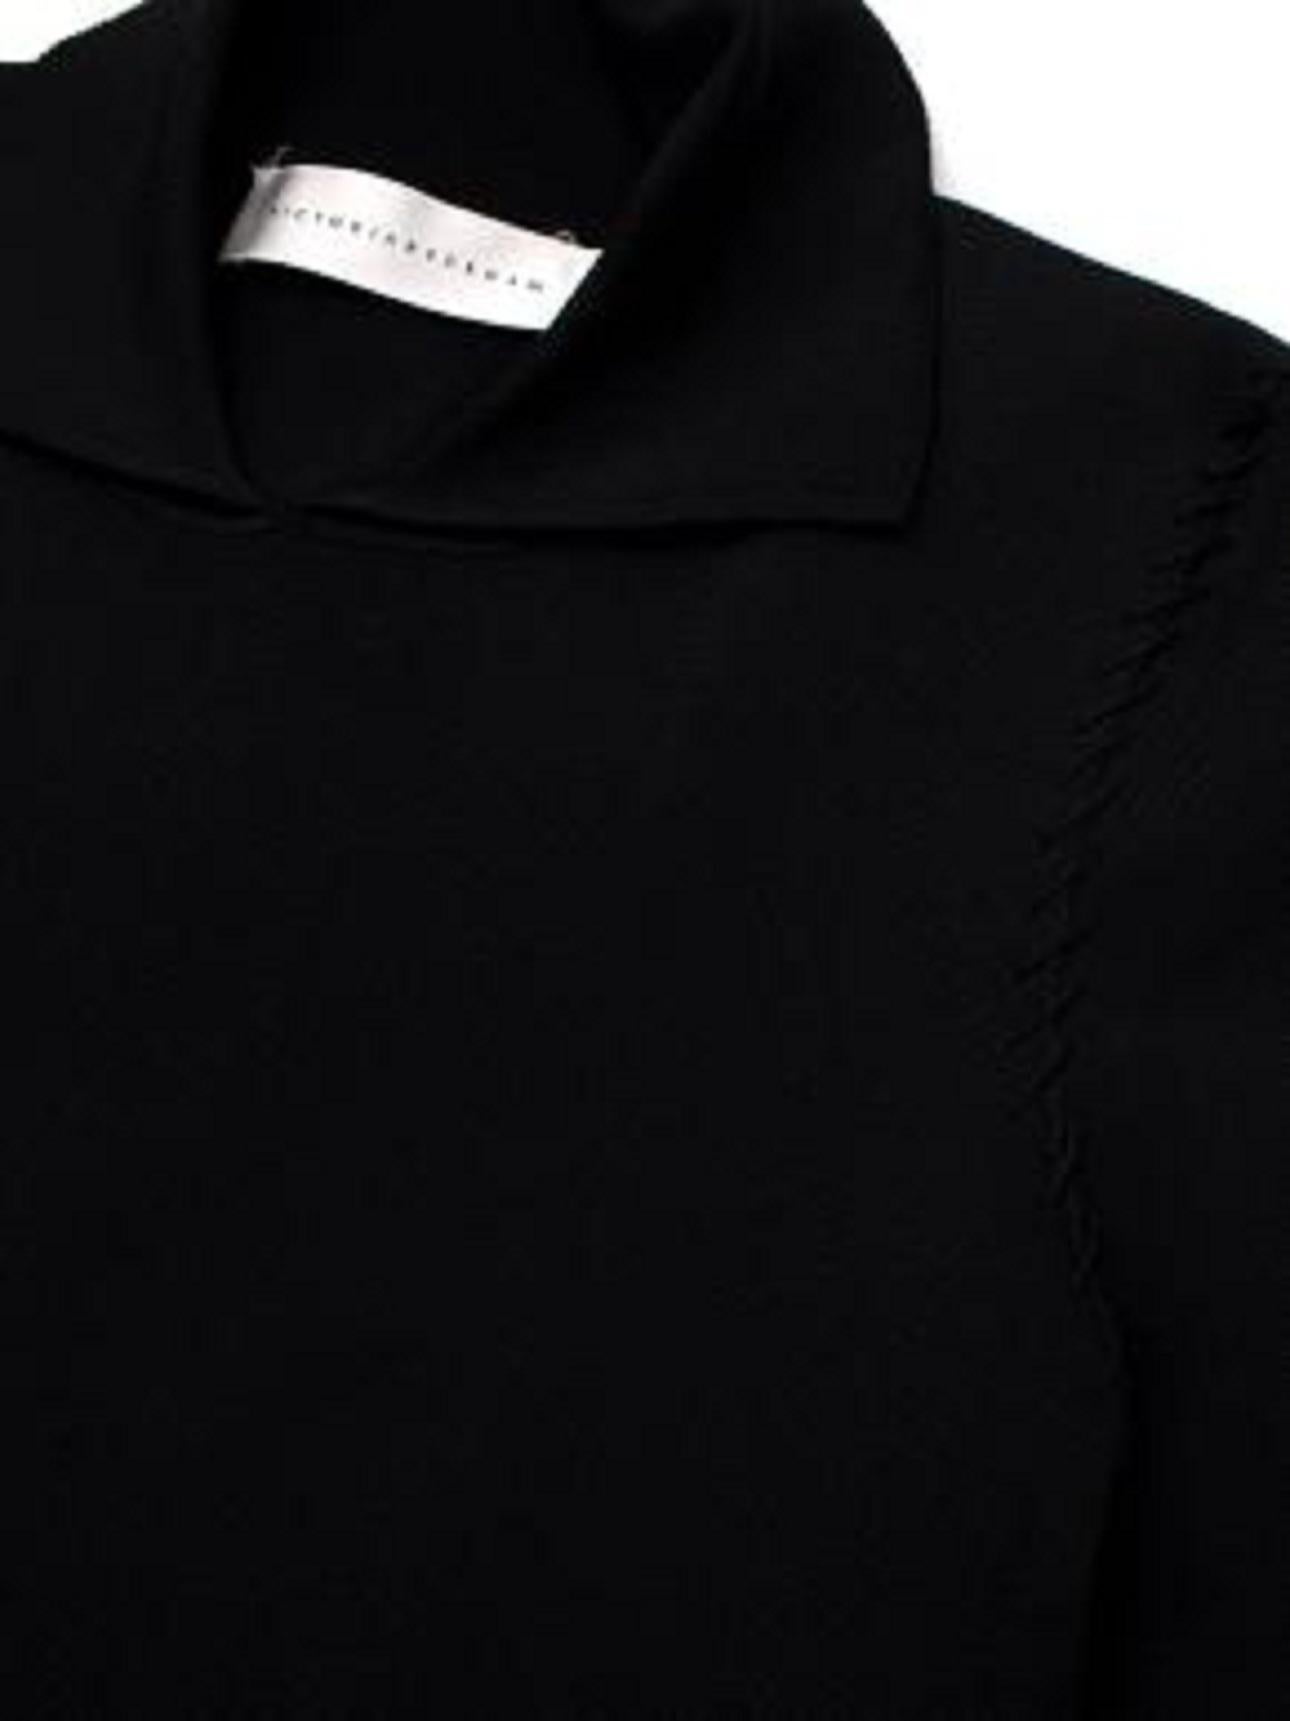 Victoria Beckham Black Stretch Knit Polo Midi Dress For Sale 1